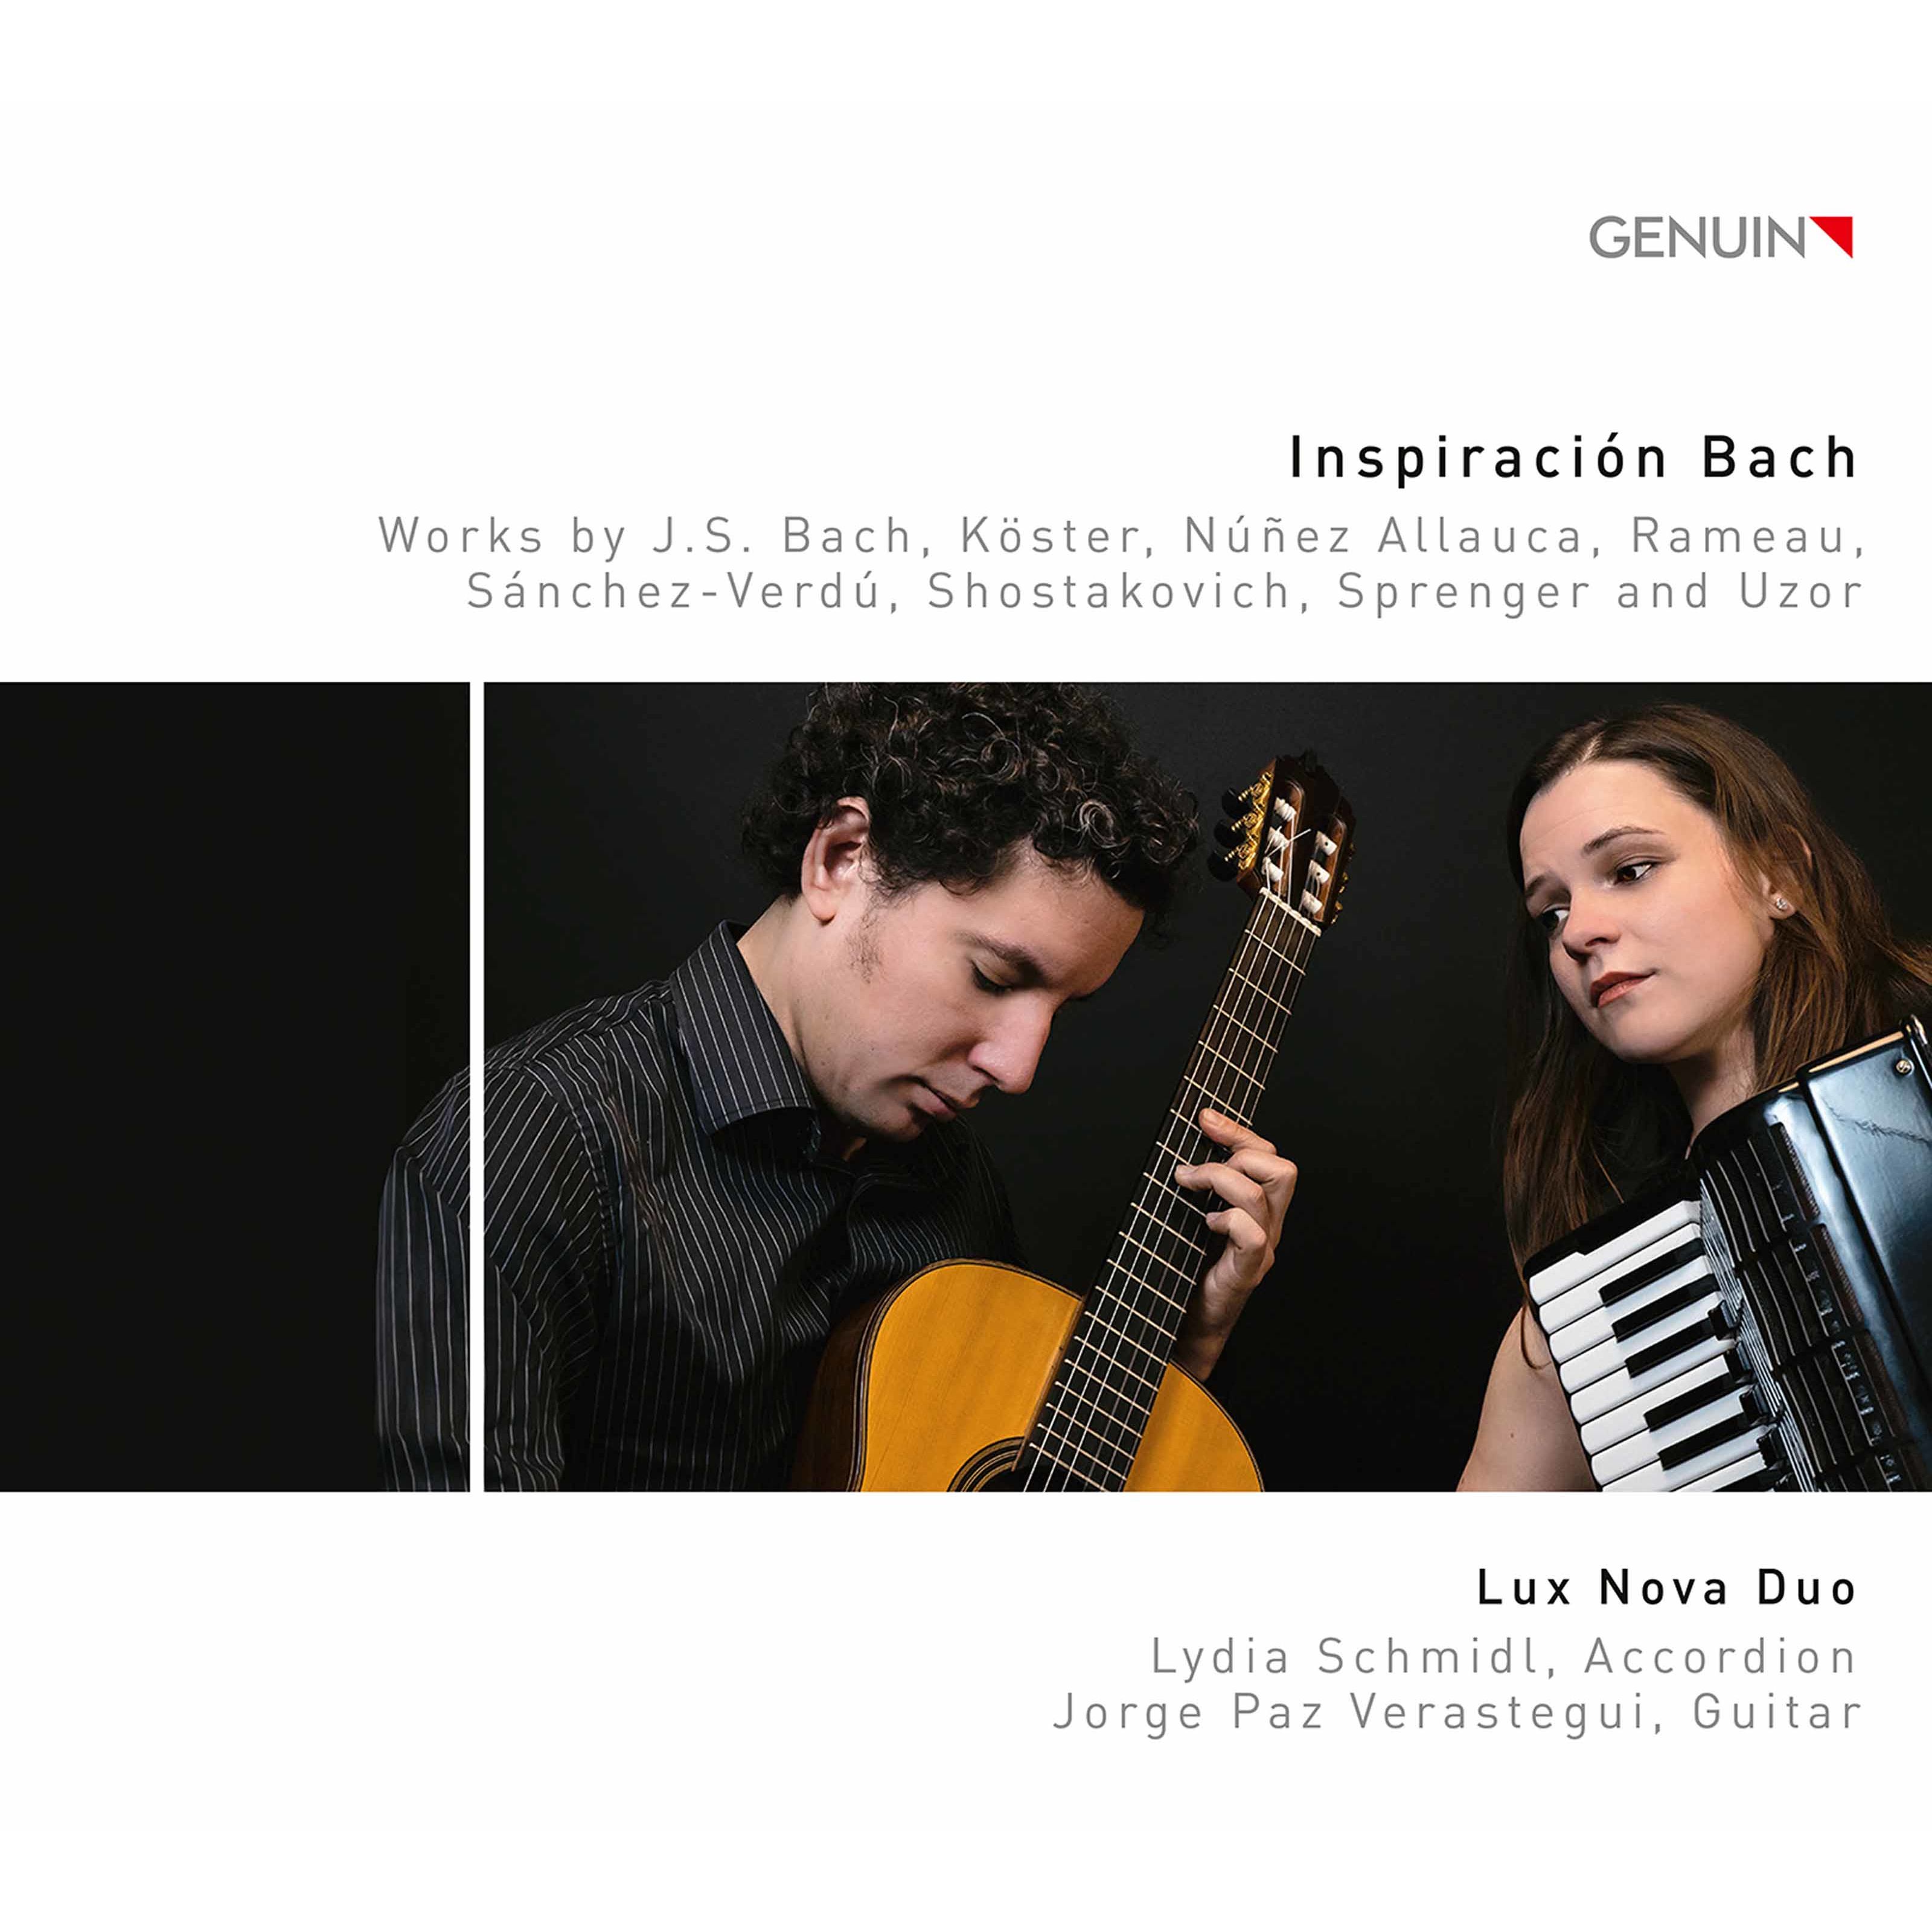 Lux Nova Duo (Lydia Schmidl, Jorge Paz Verastegui) – Inspiracion Bach (2020) [FLAC 24bit/96kHz]